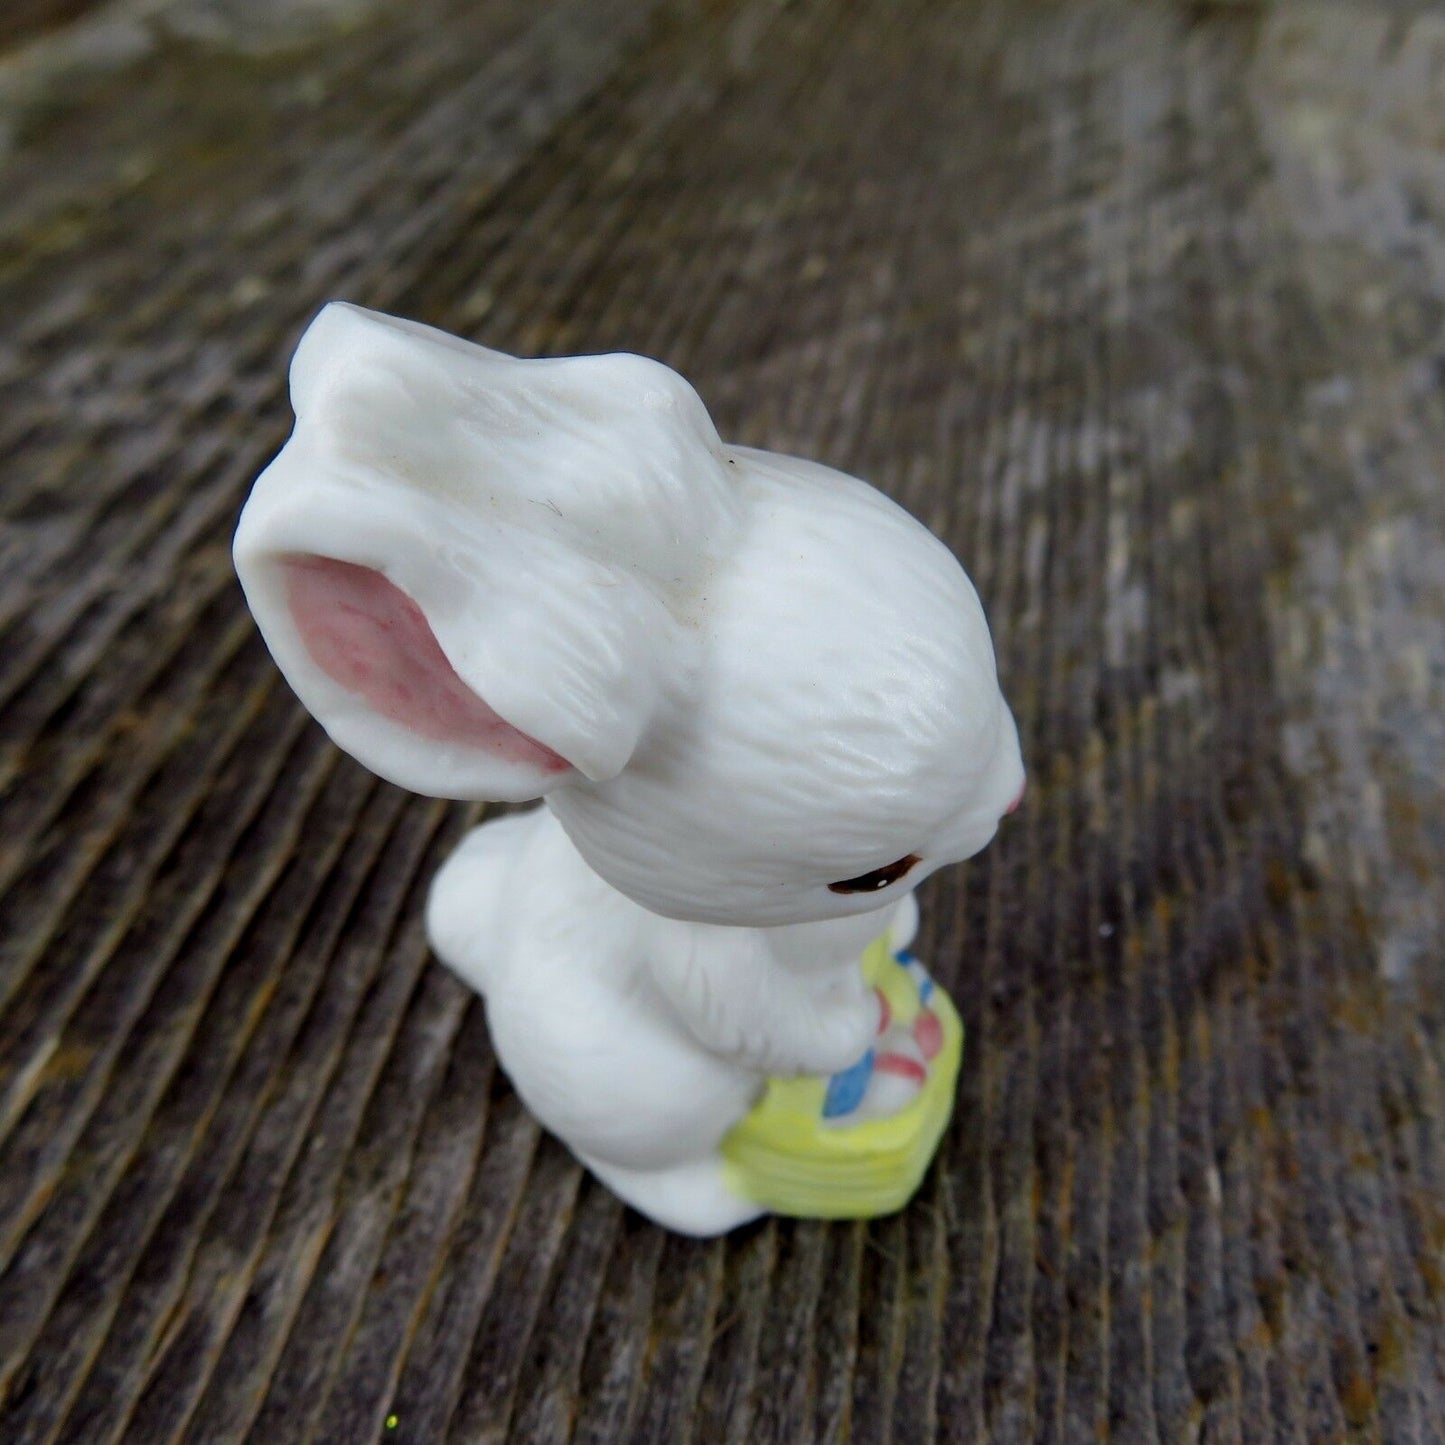 Vintage Bunny Rabbit Hallmark Cards Easter Figurine White Hare 1982 - At Grandma's Table